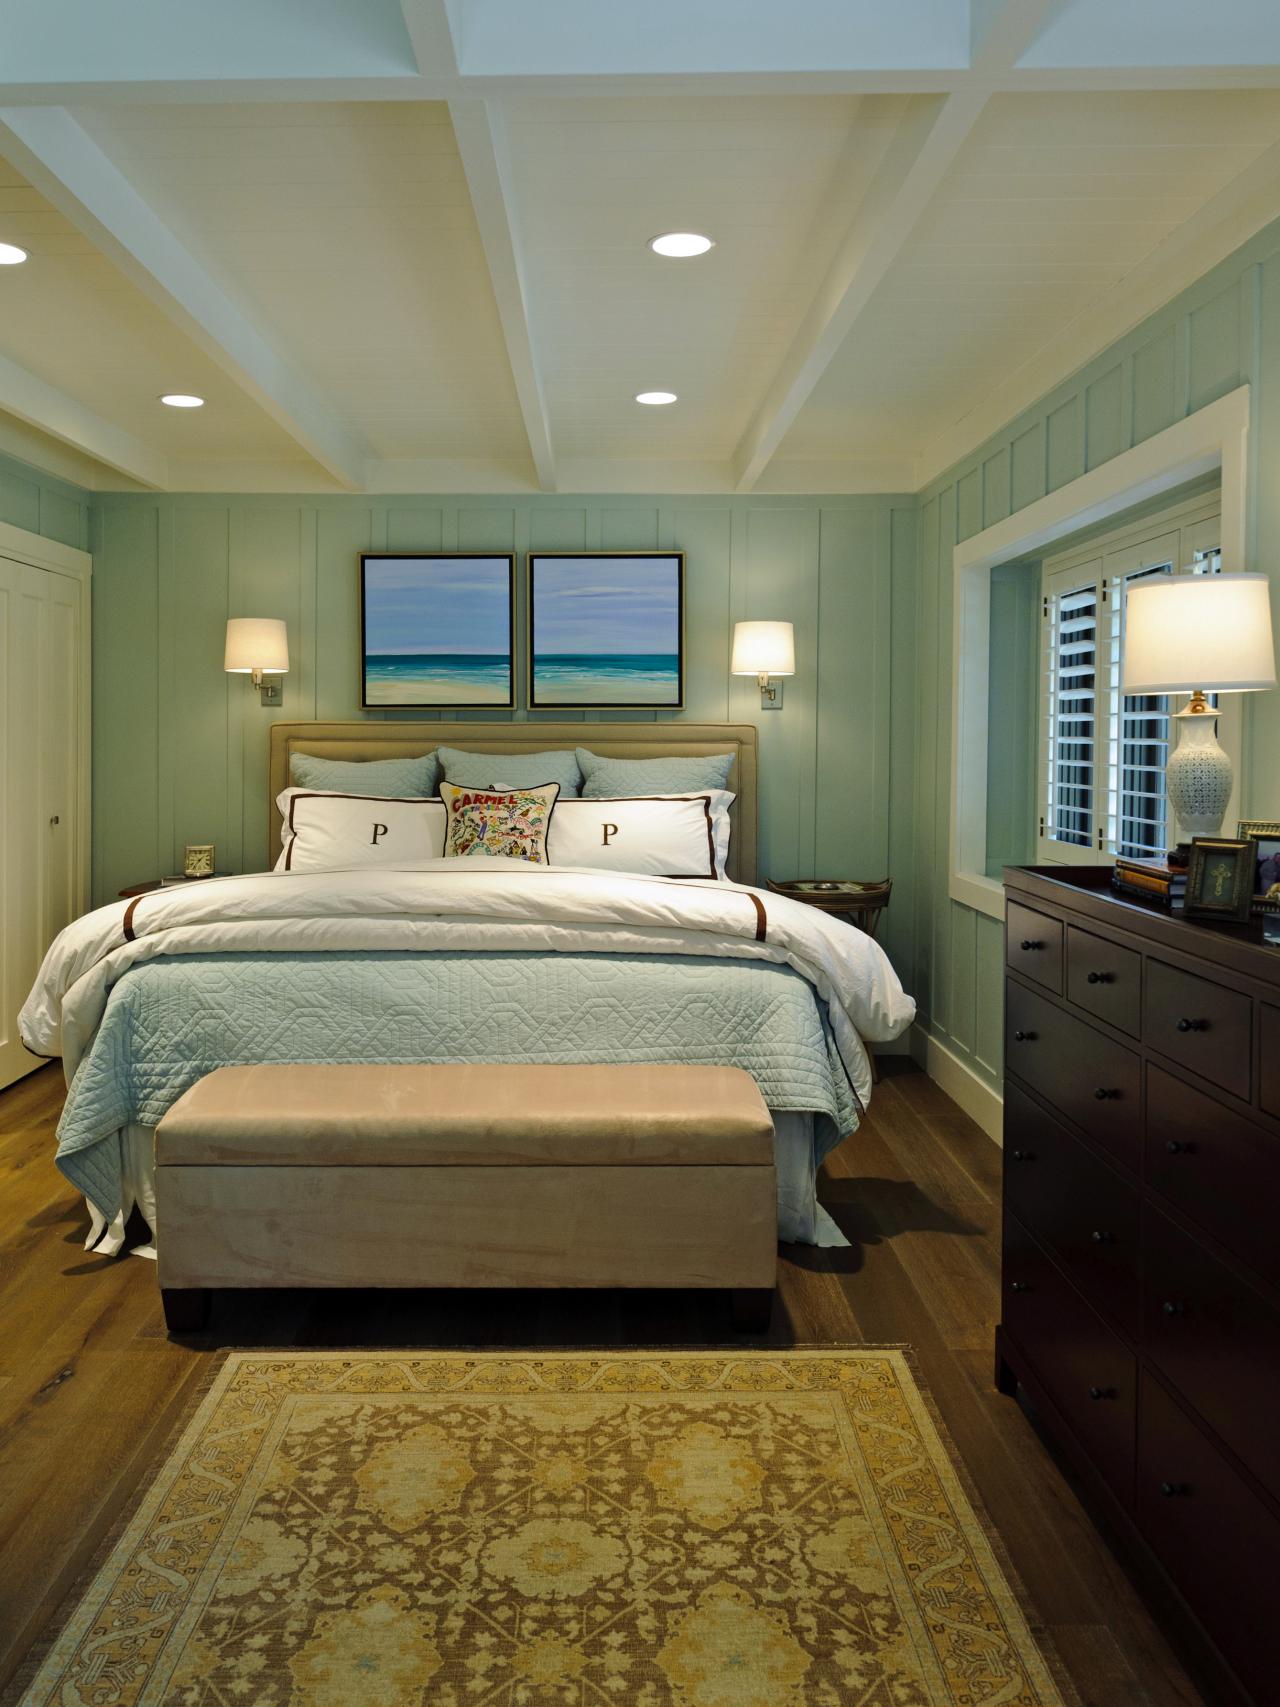 25 Cool Beach Style Bedroom Design Ideas | Beach bedroom ...